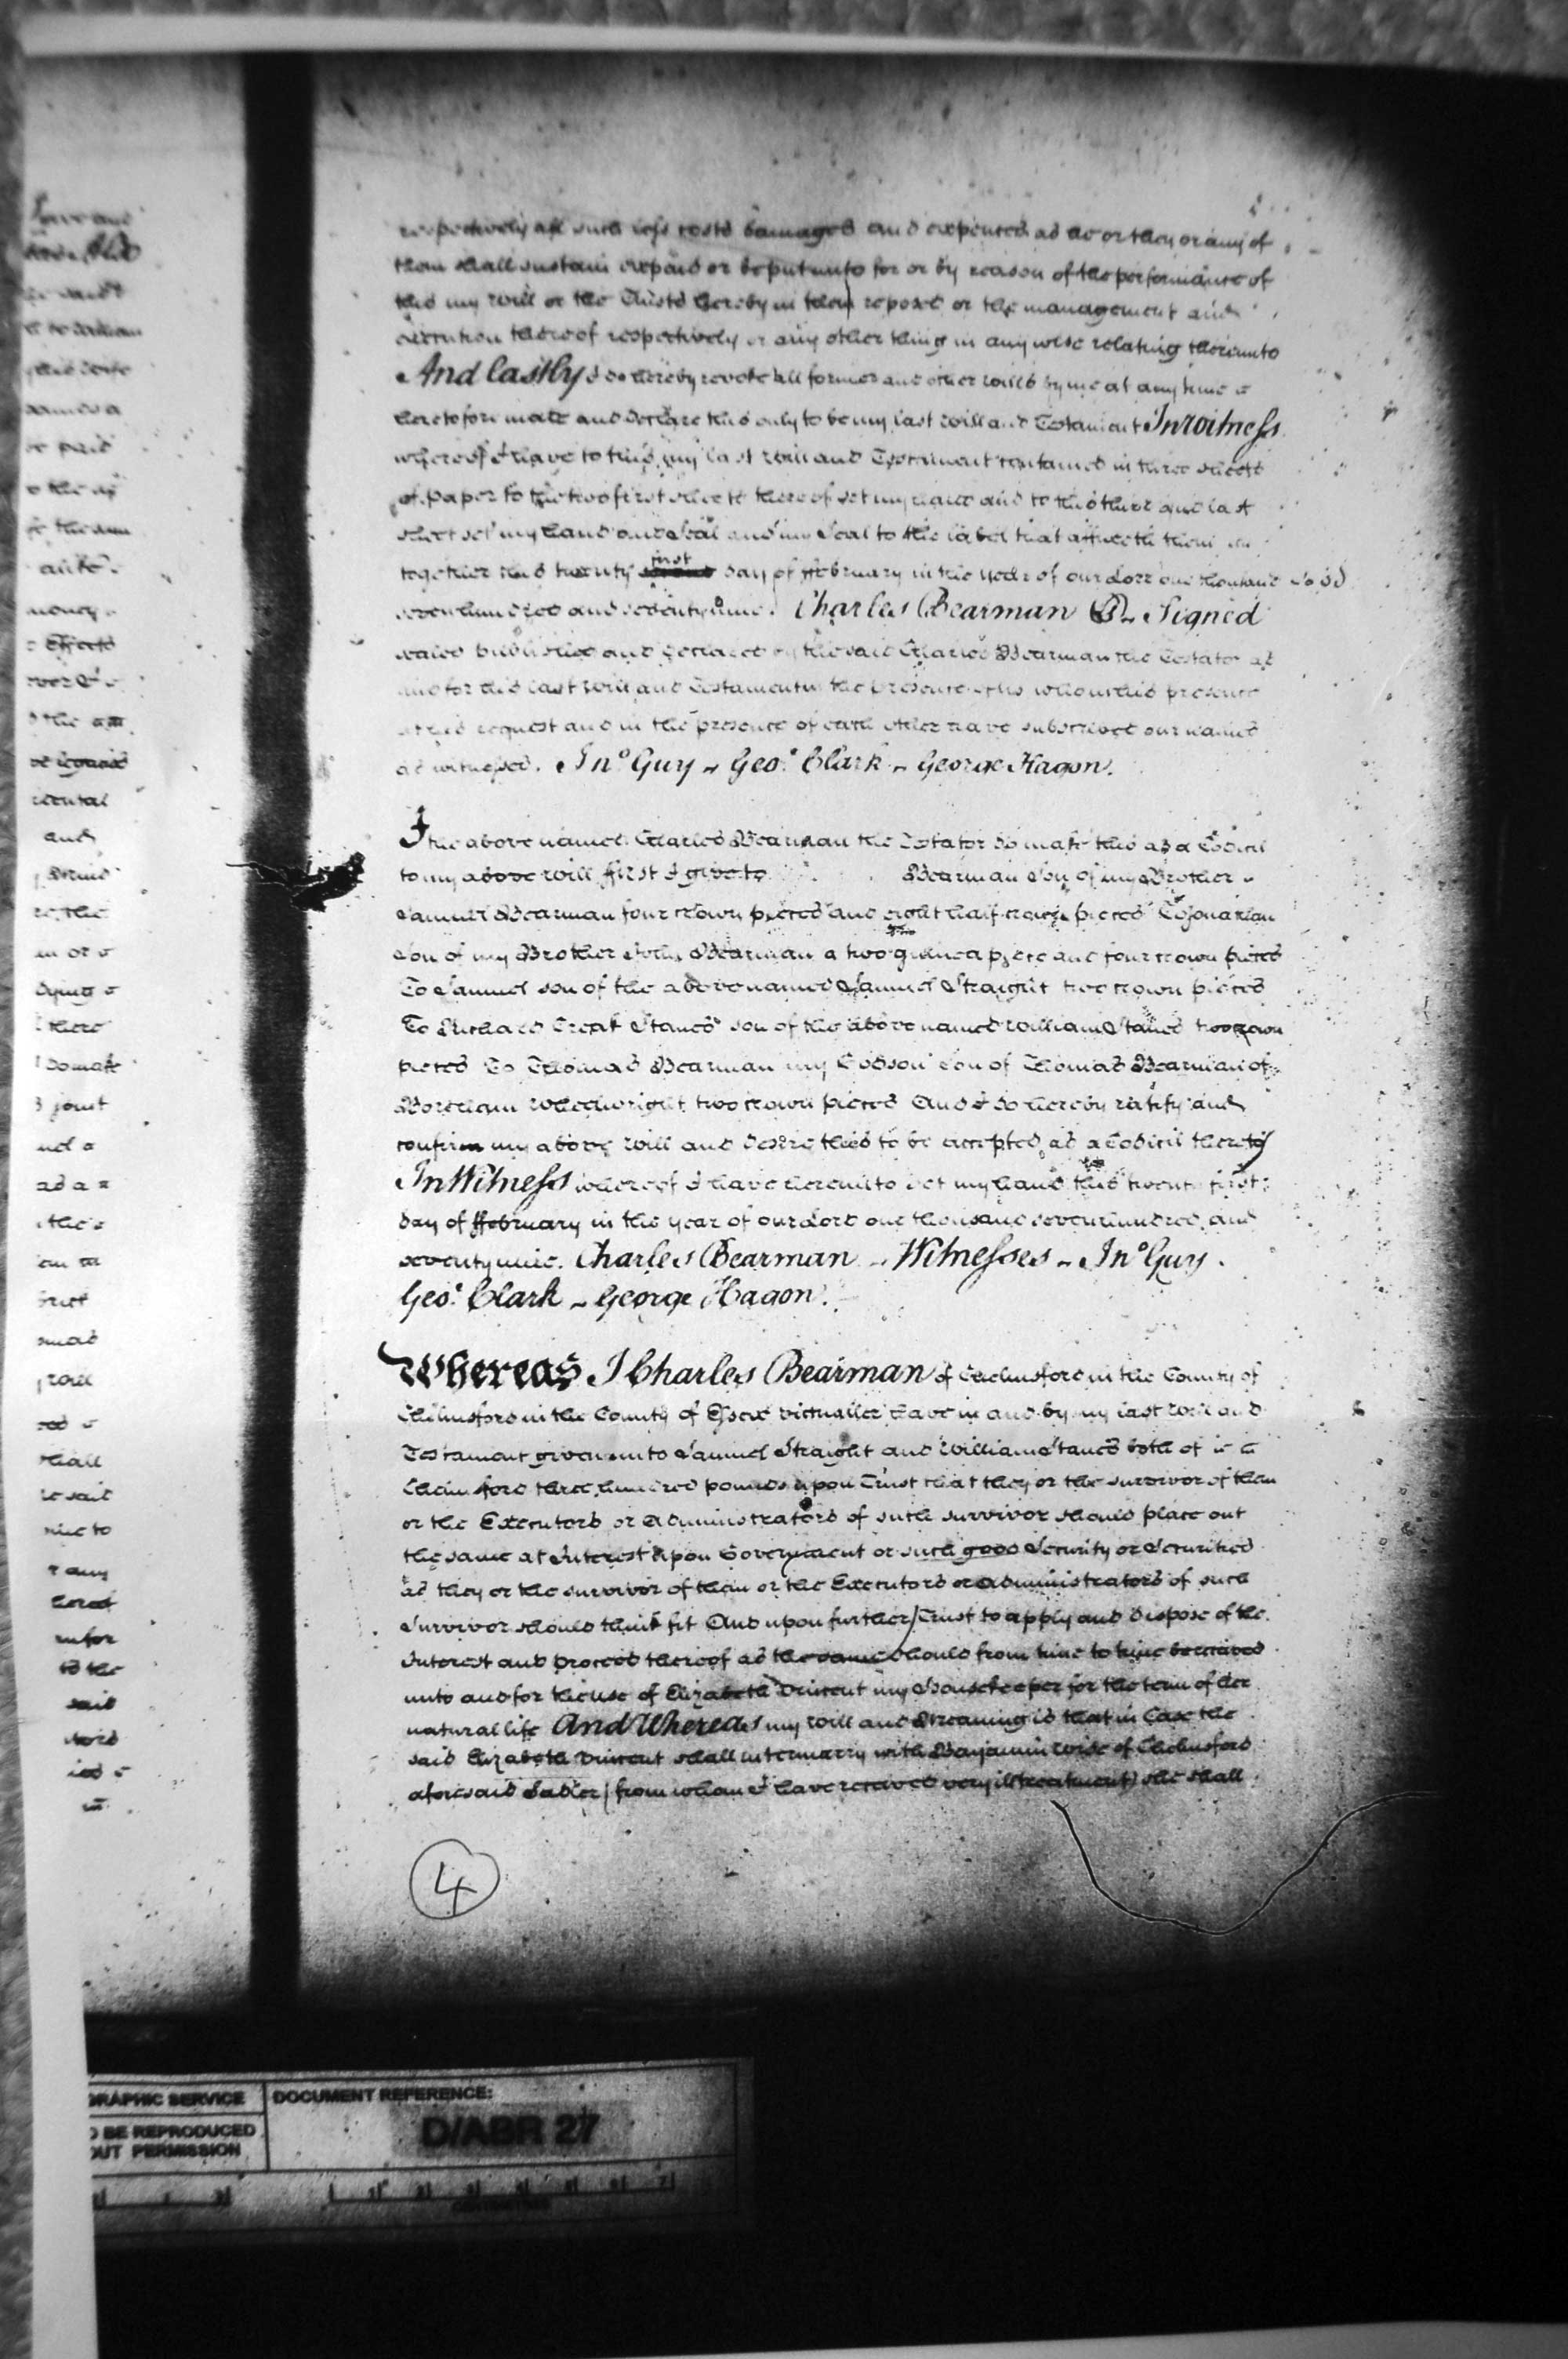 The will of Charles Bearman 1779. Page 4 shows reference to Thomas Bearman Godson and son of Thomas Bearman, wheelwright